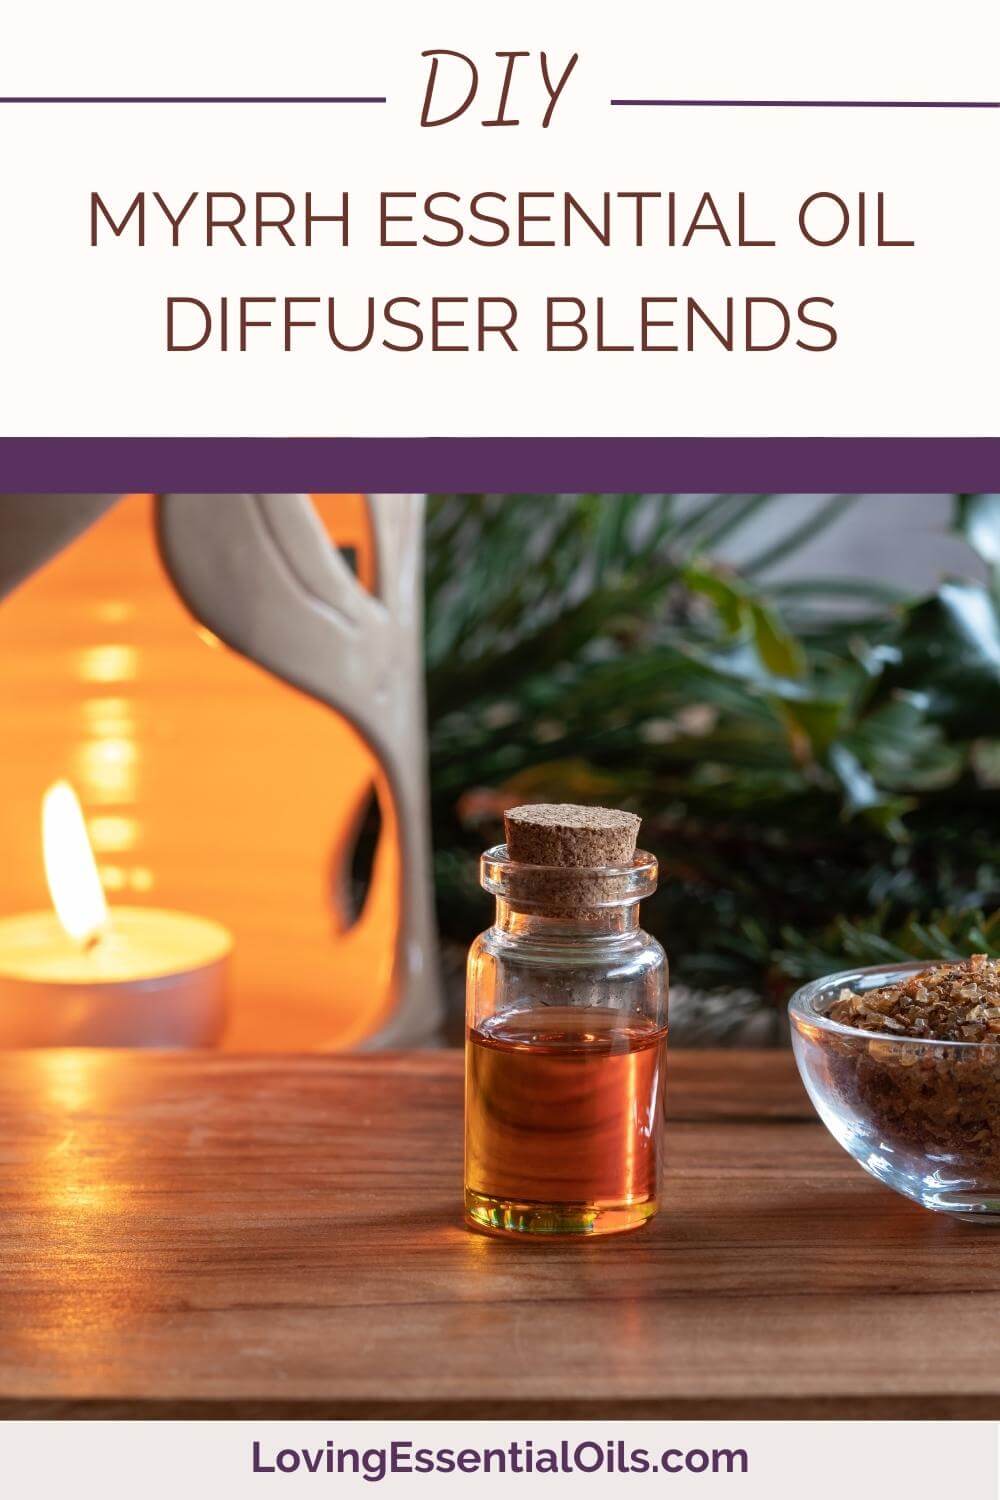 Myrrh Essential Oil Diffuser Blends by Loving Essential Oils